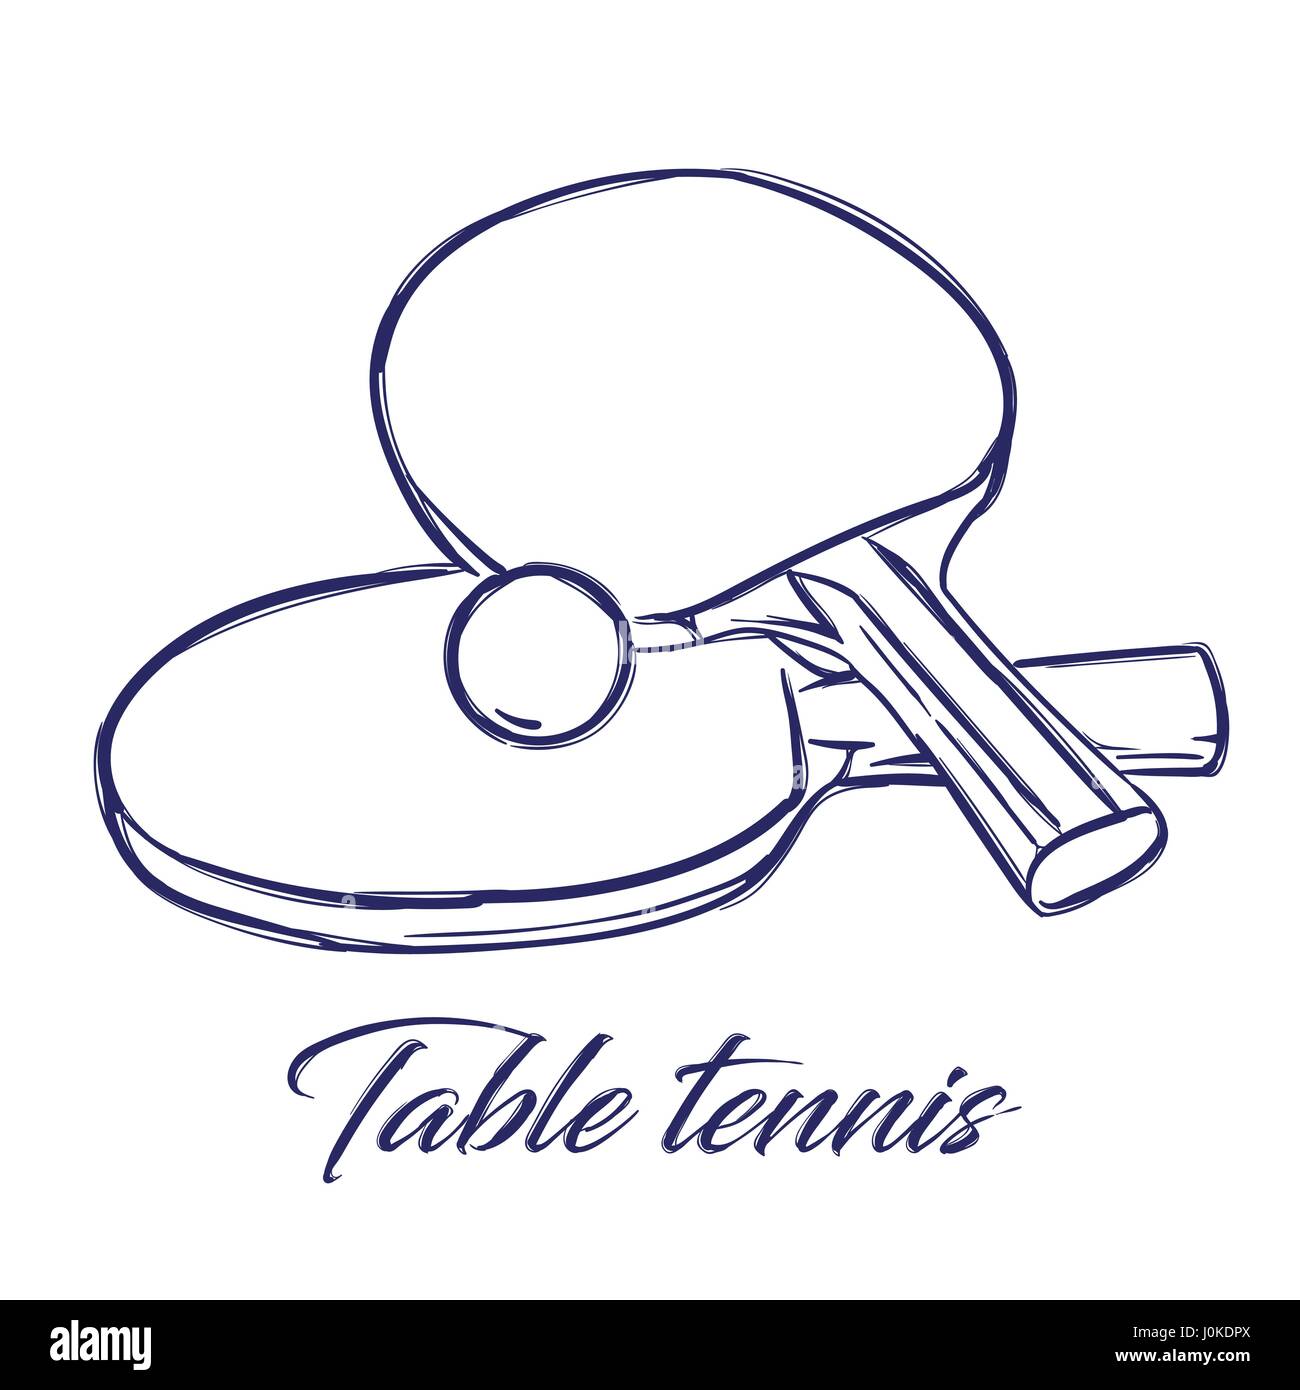 table tennis bats and ball Stock Vector